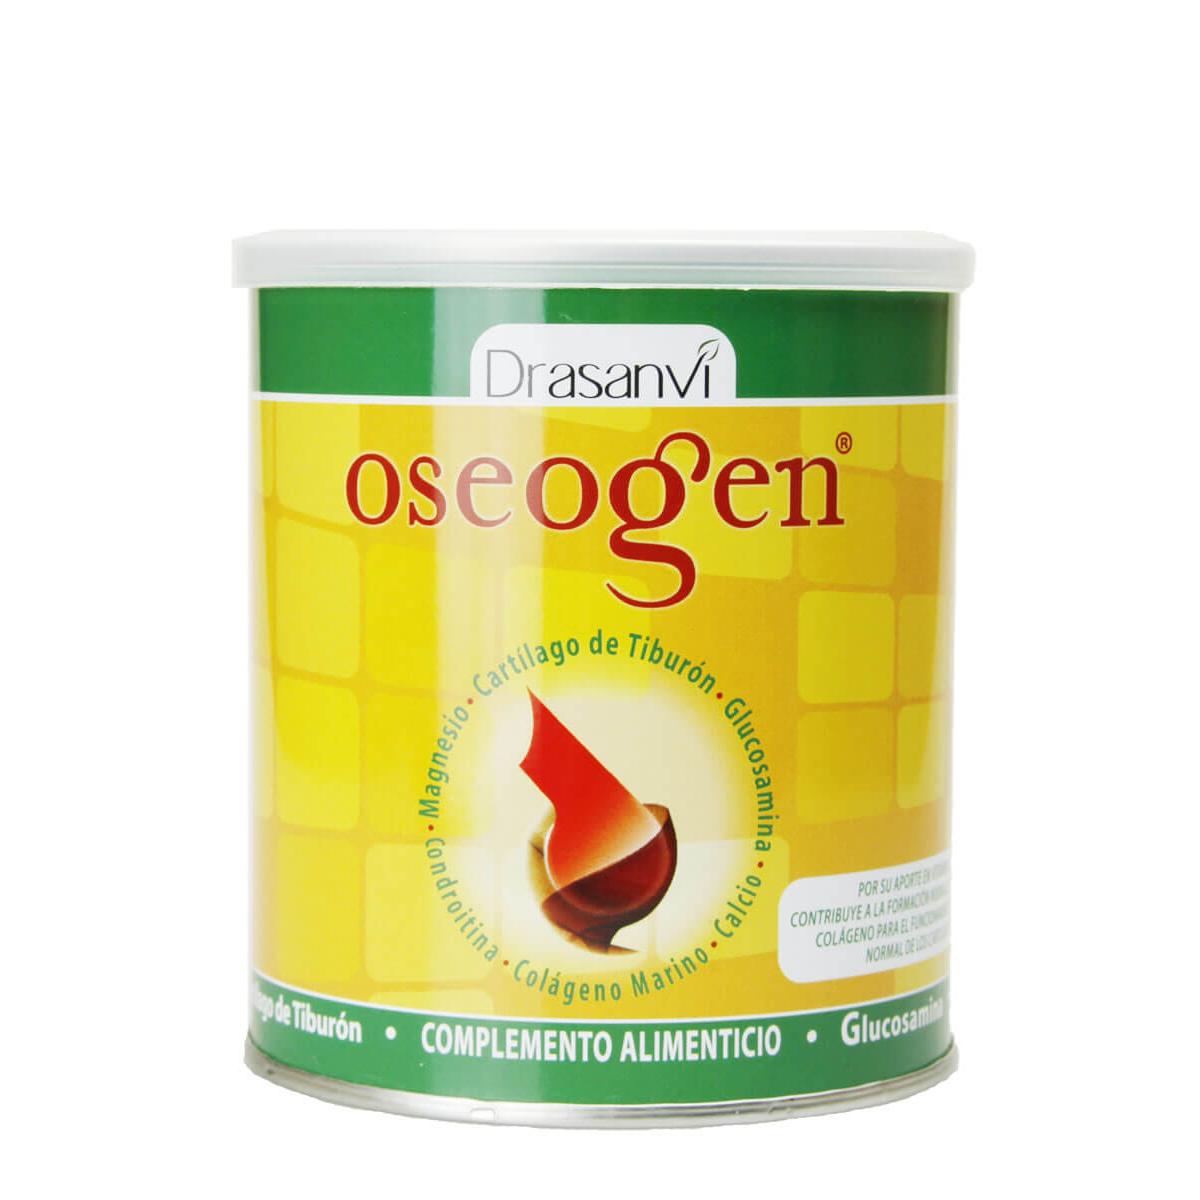 Drasanvi - Oseogen polvo 375 g